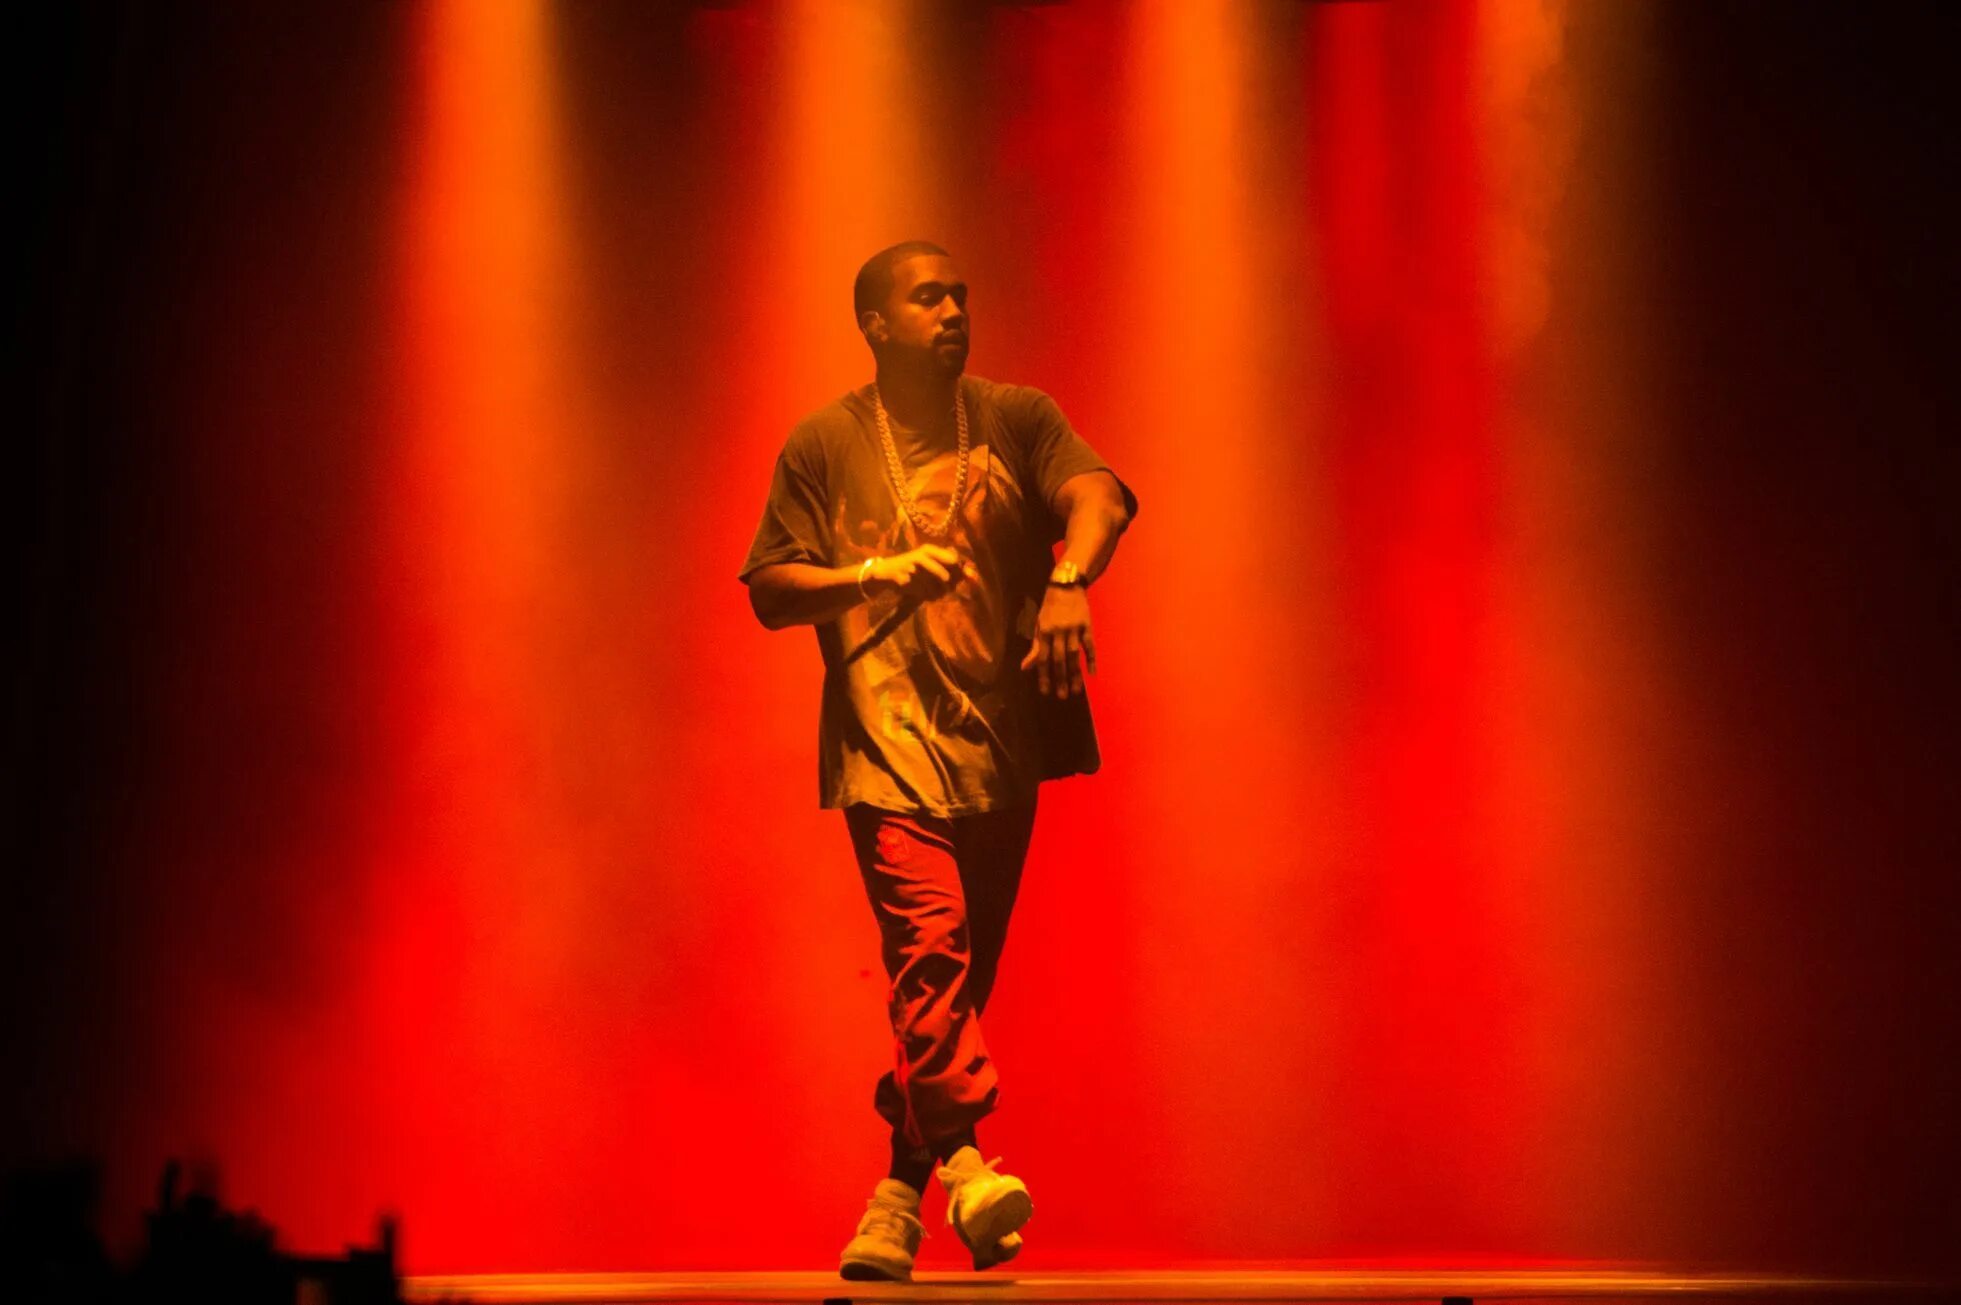 Kanye West. Kanye West Pablo. Kanye West Design. Kanye West на сцене. Kanye west rich the kid